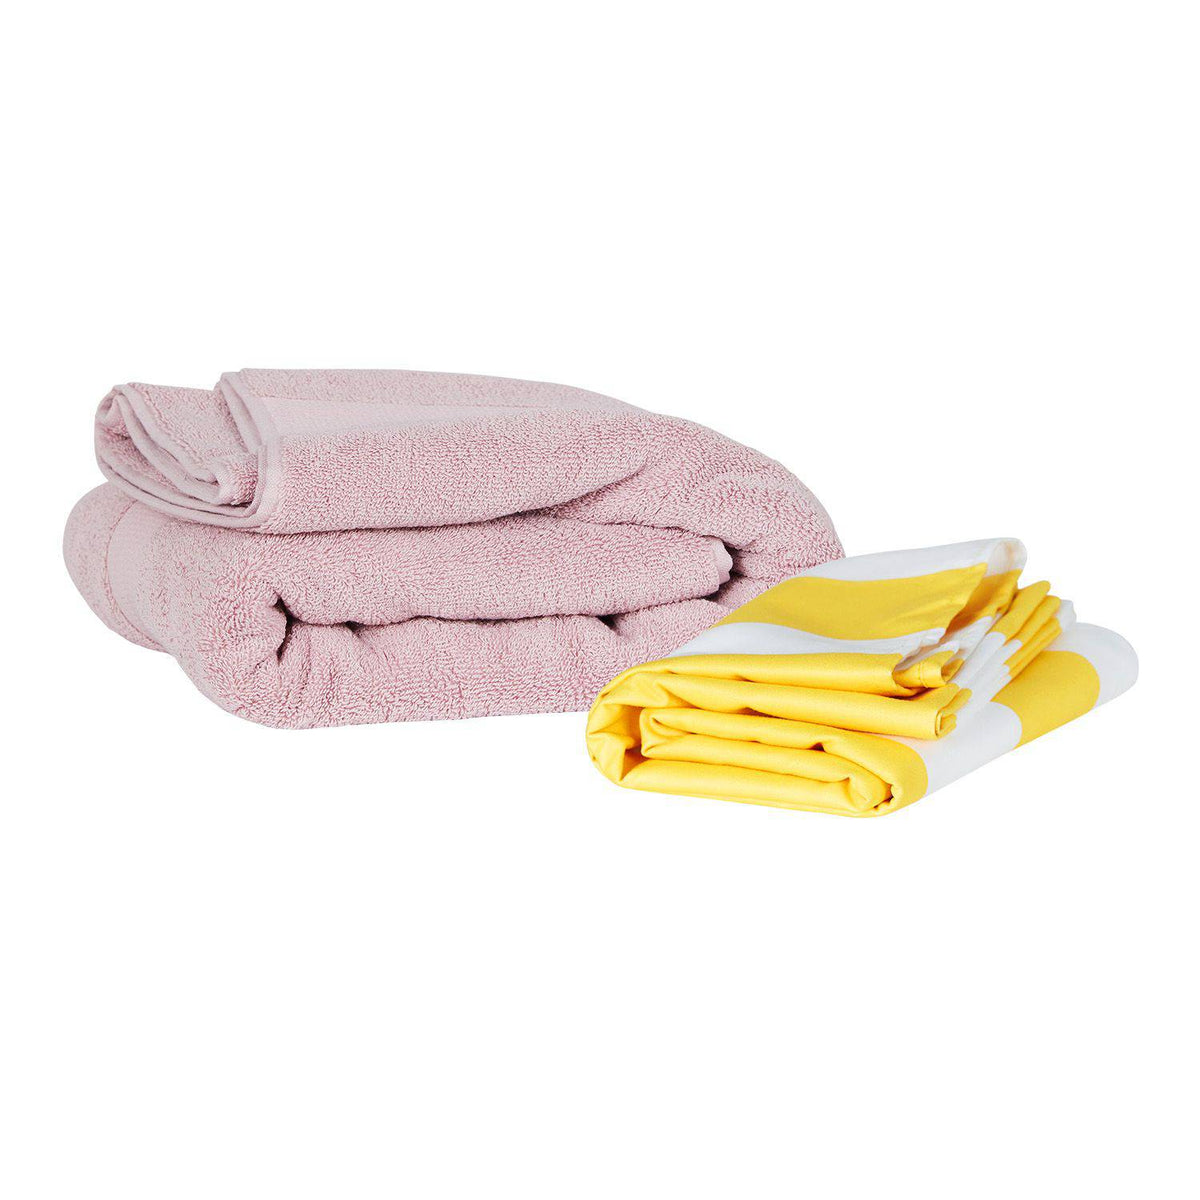 Cabana Stripe Boracay Yellow Beach Towel - 2 sizes - The Preppy Bunny